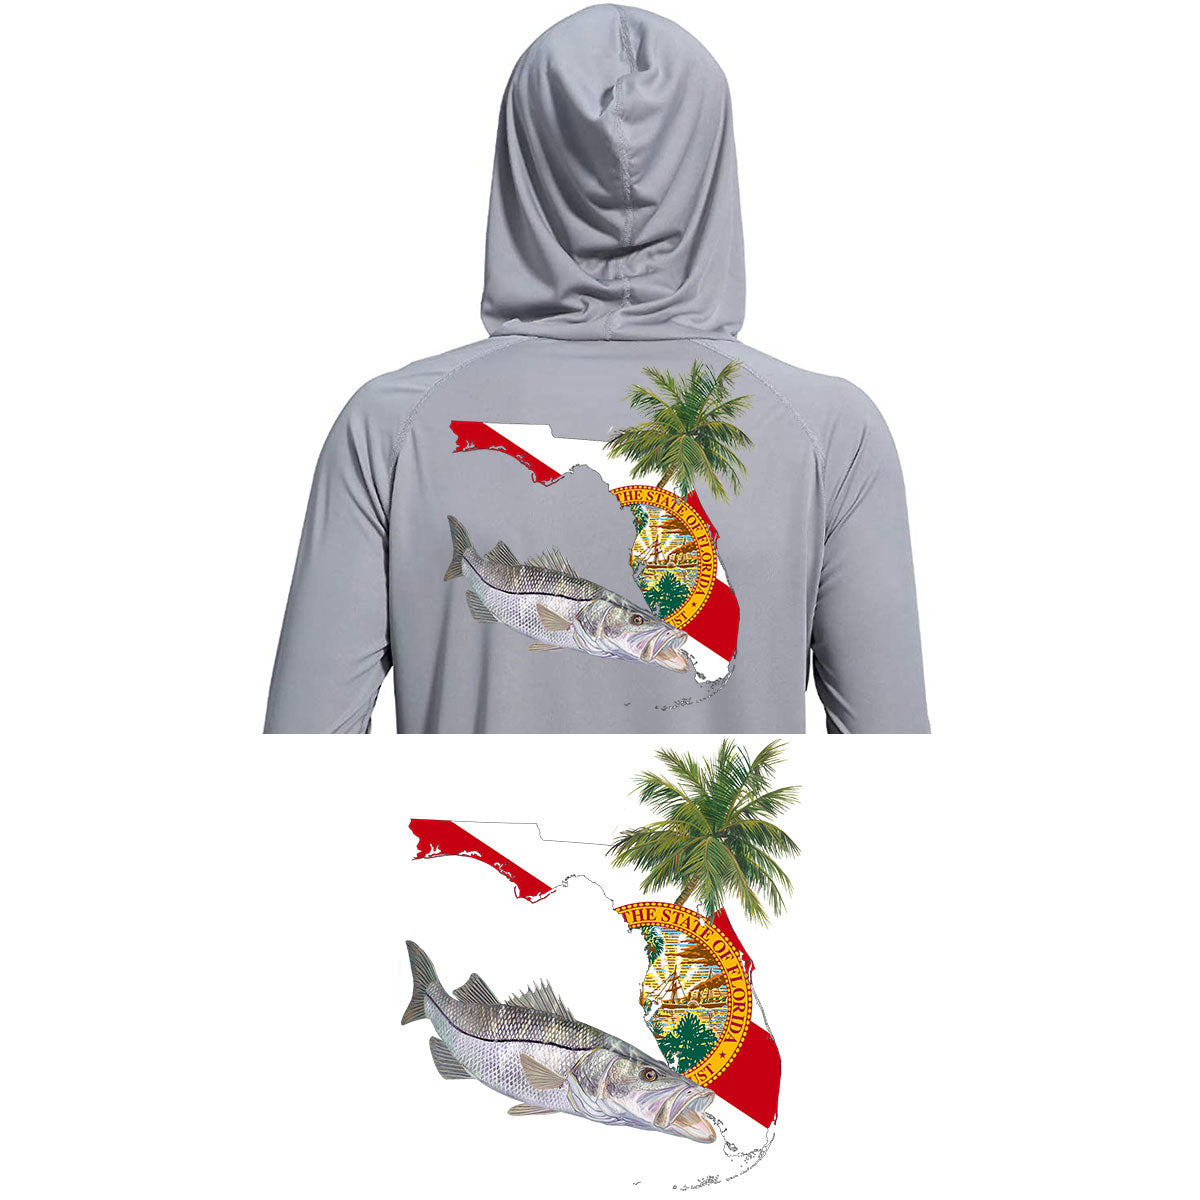 Hoodie Snook Florida Fishing Shirt with FL State Flag Sleeve - Skiff Life